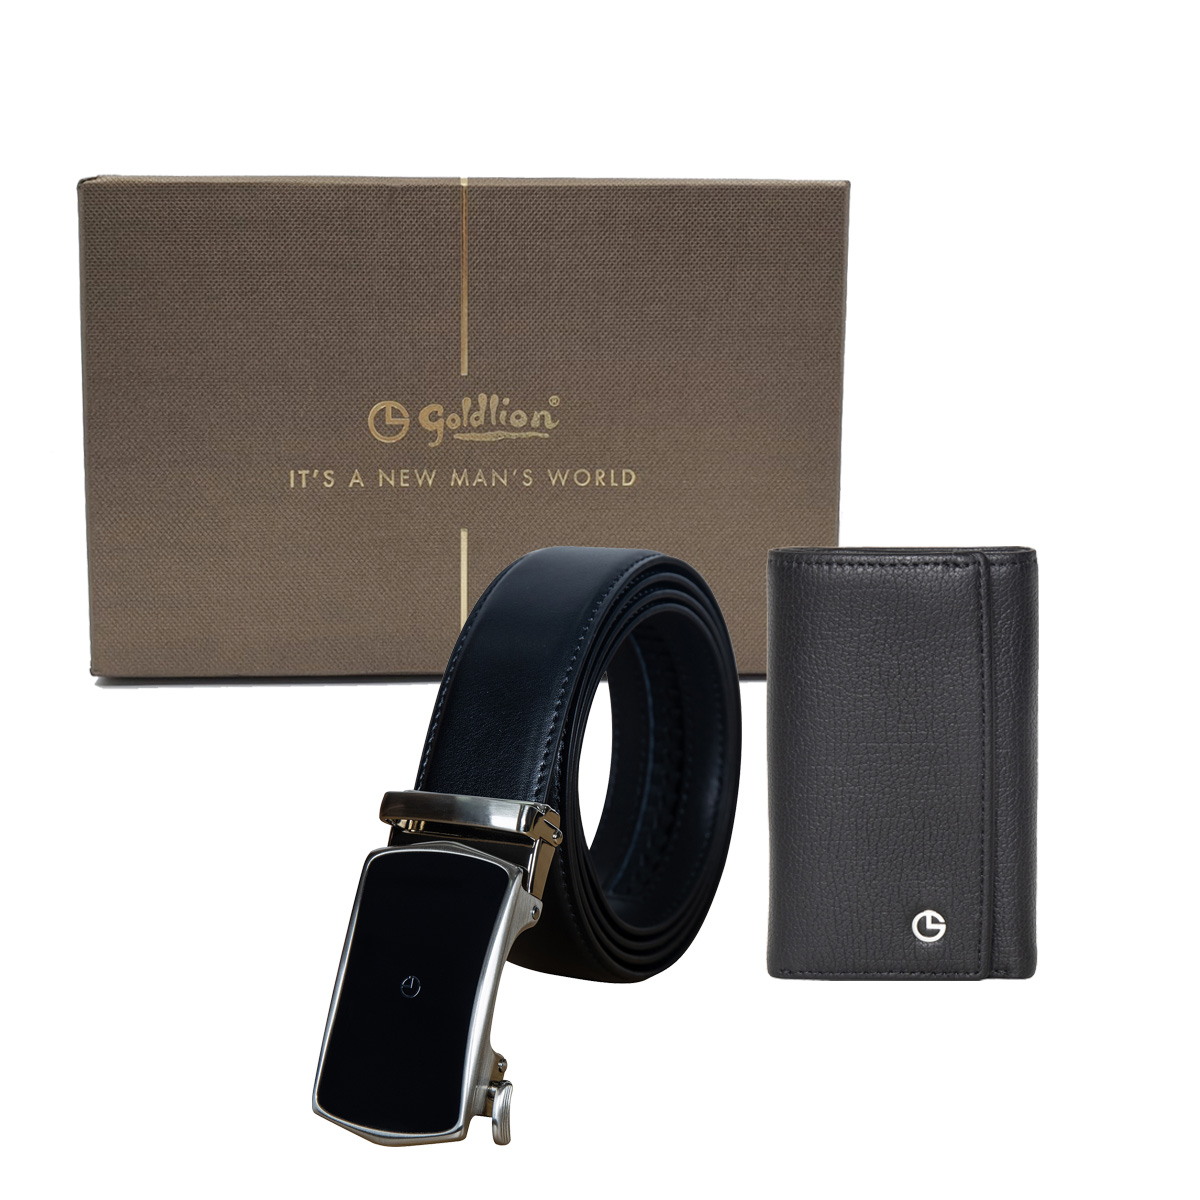 [Online Exclusive] Goldlion Genuine Leather Key Pouch & Auto Lock Belt Gift Set